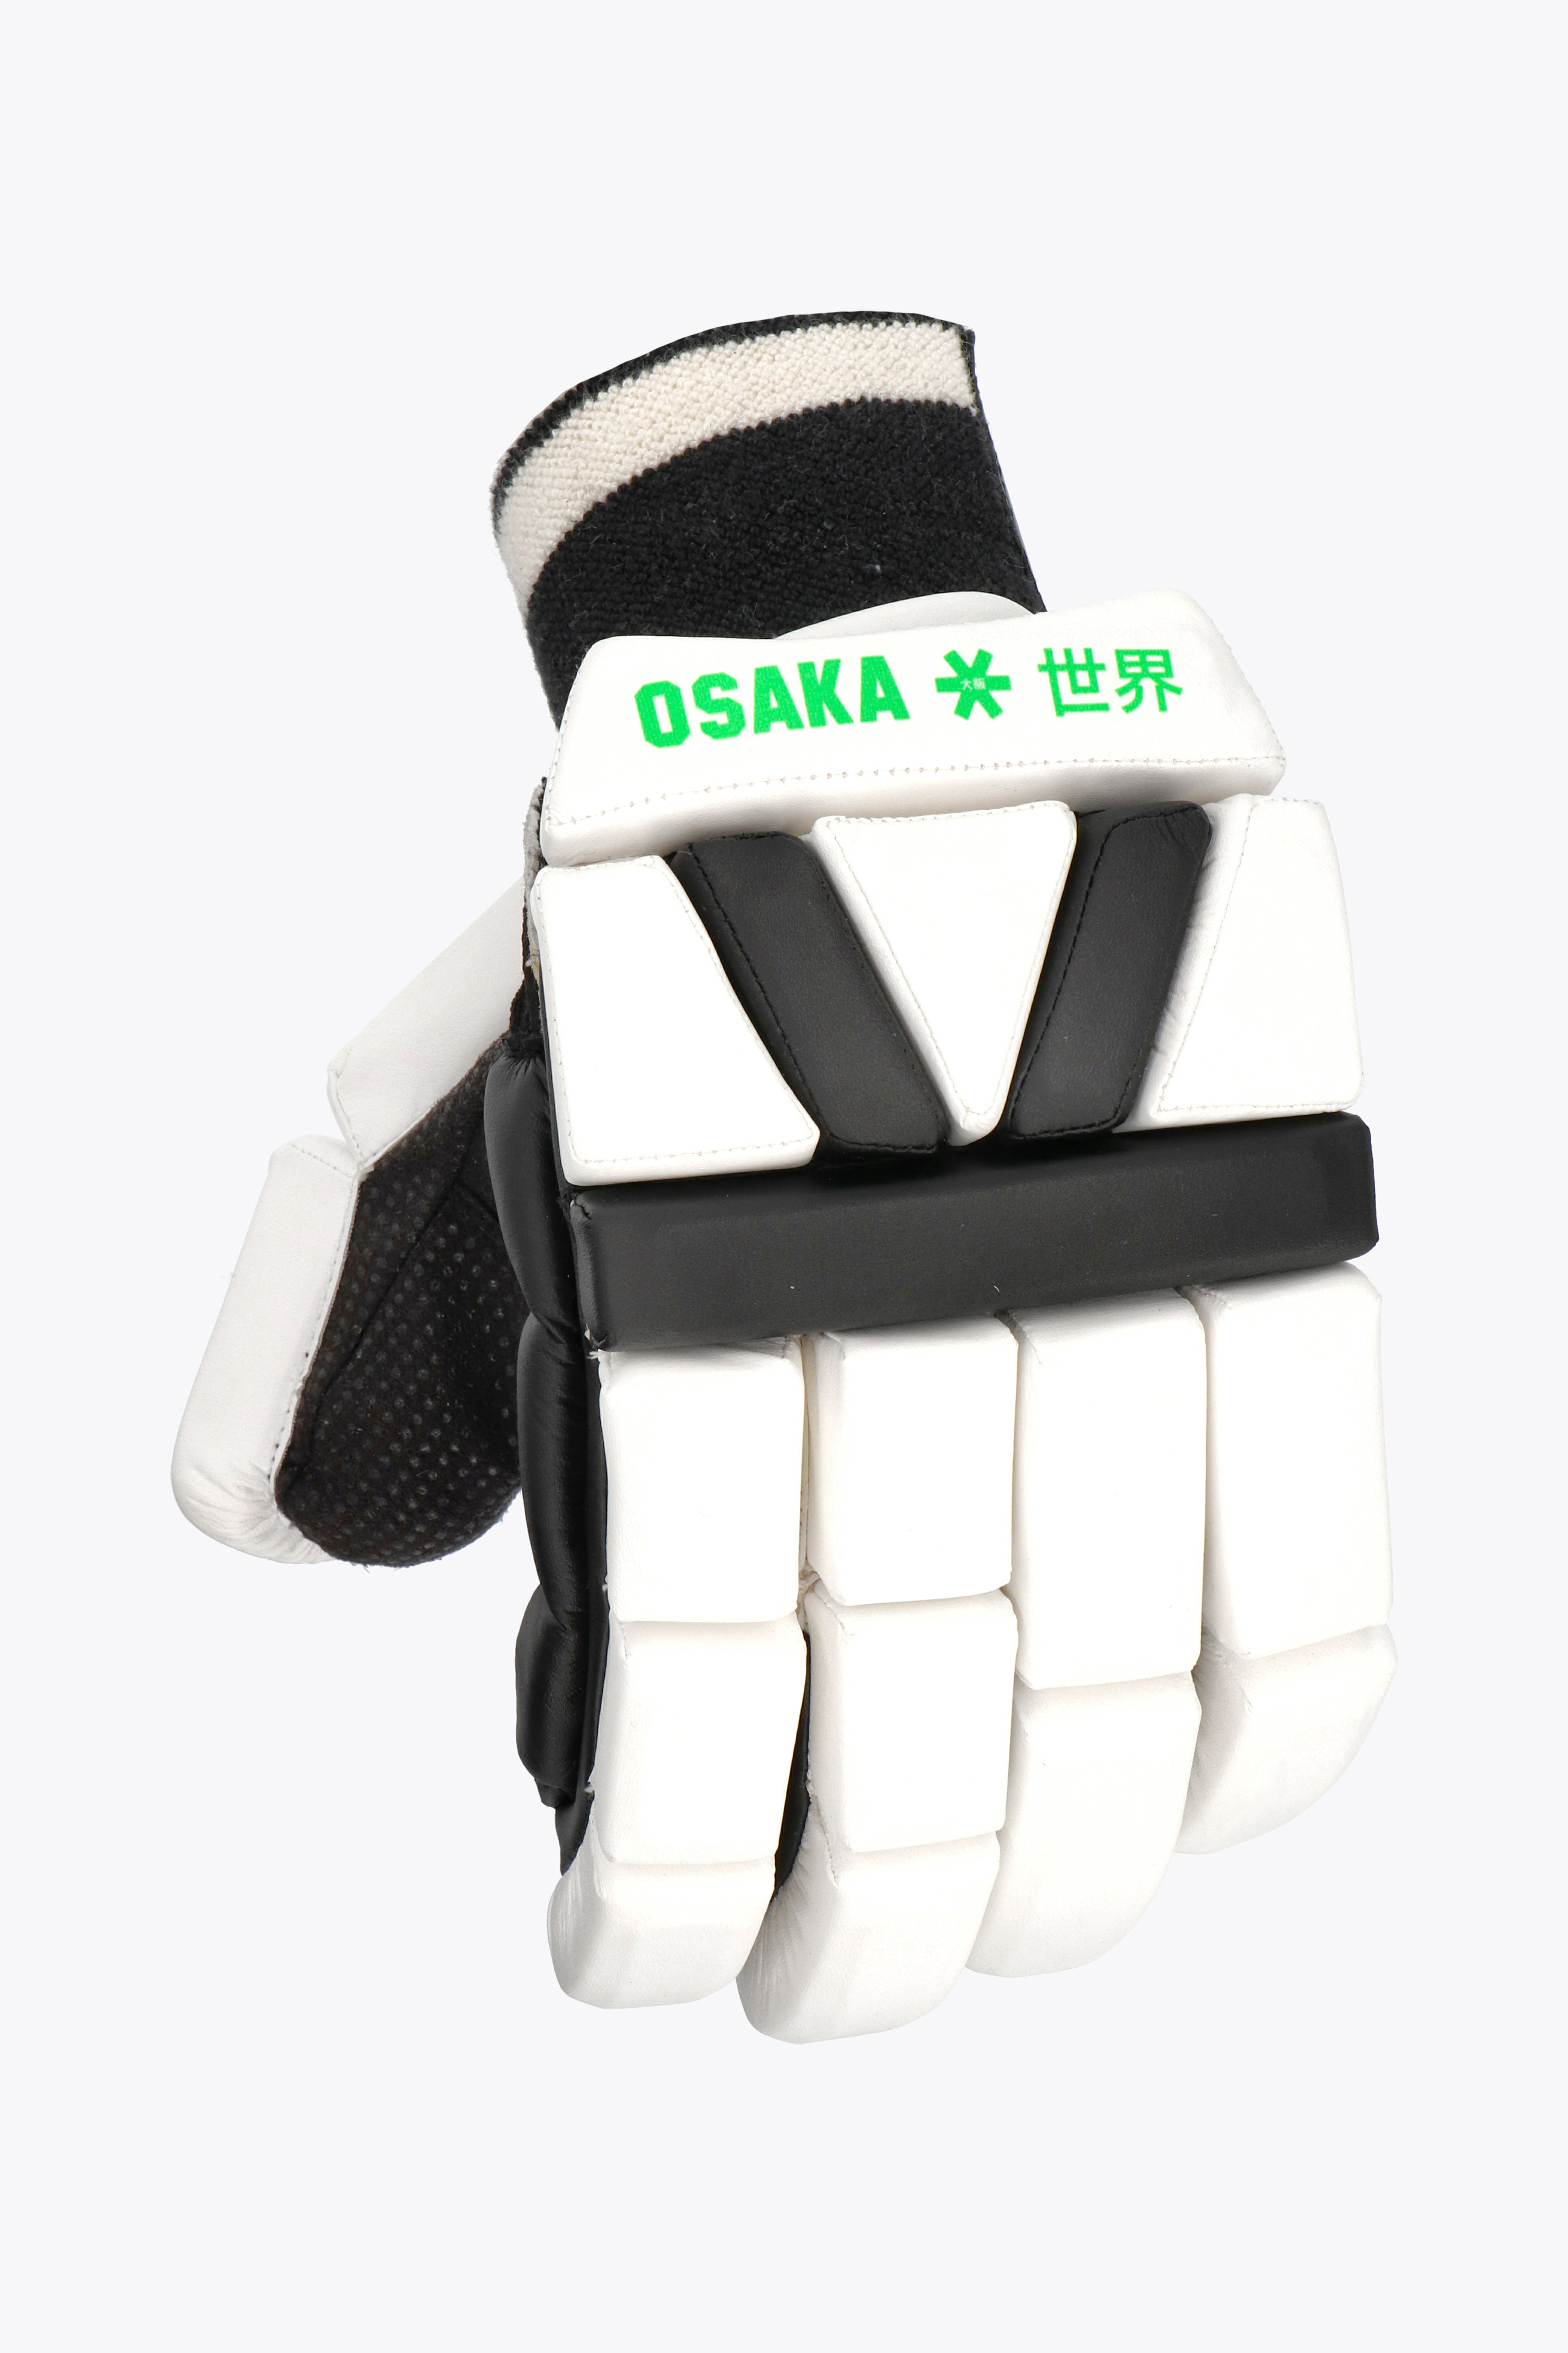 Osaka Binnen Hockeyhandschoen - / Zwart ｜Osakaworld.com | Osaka